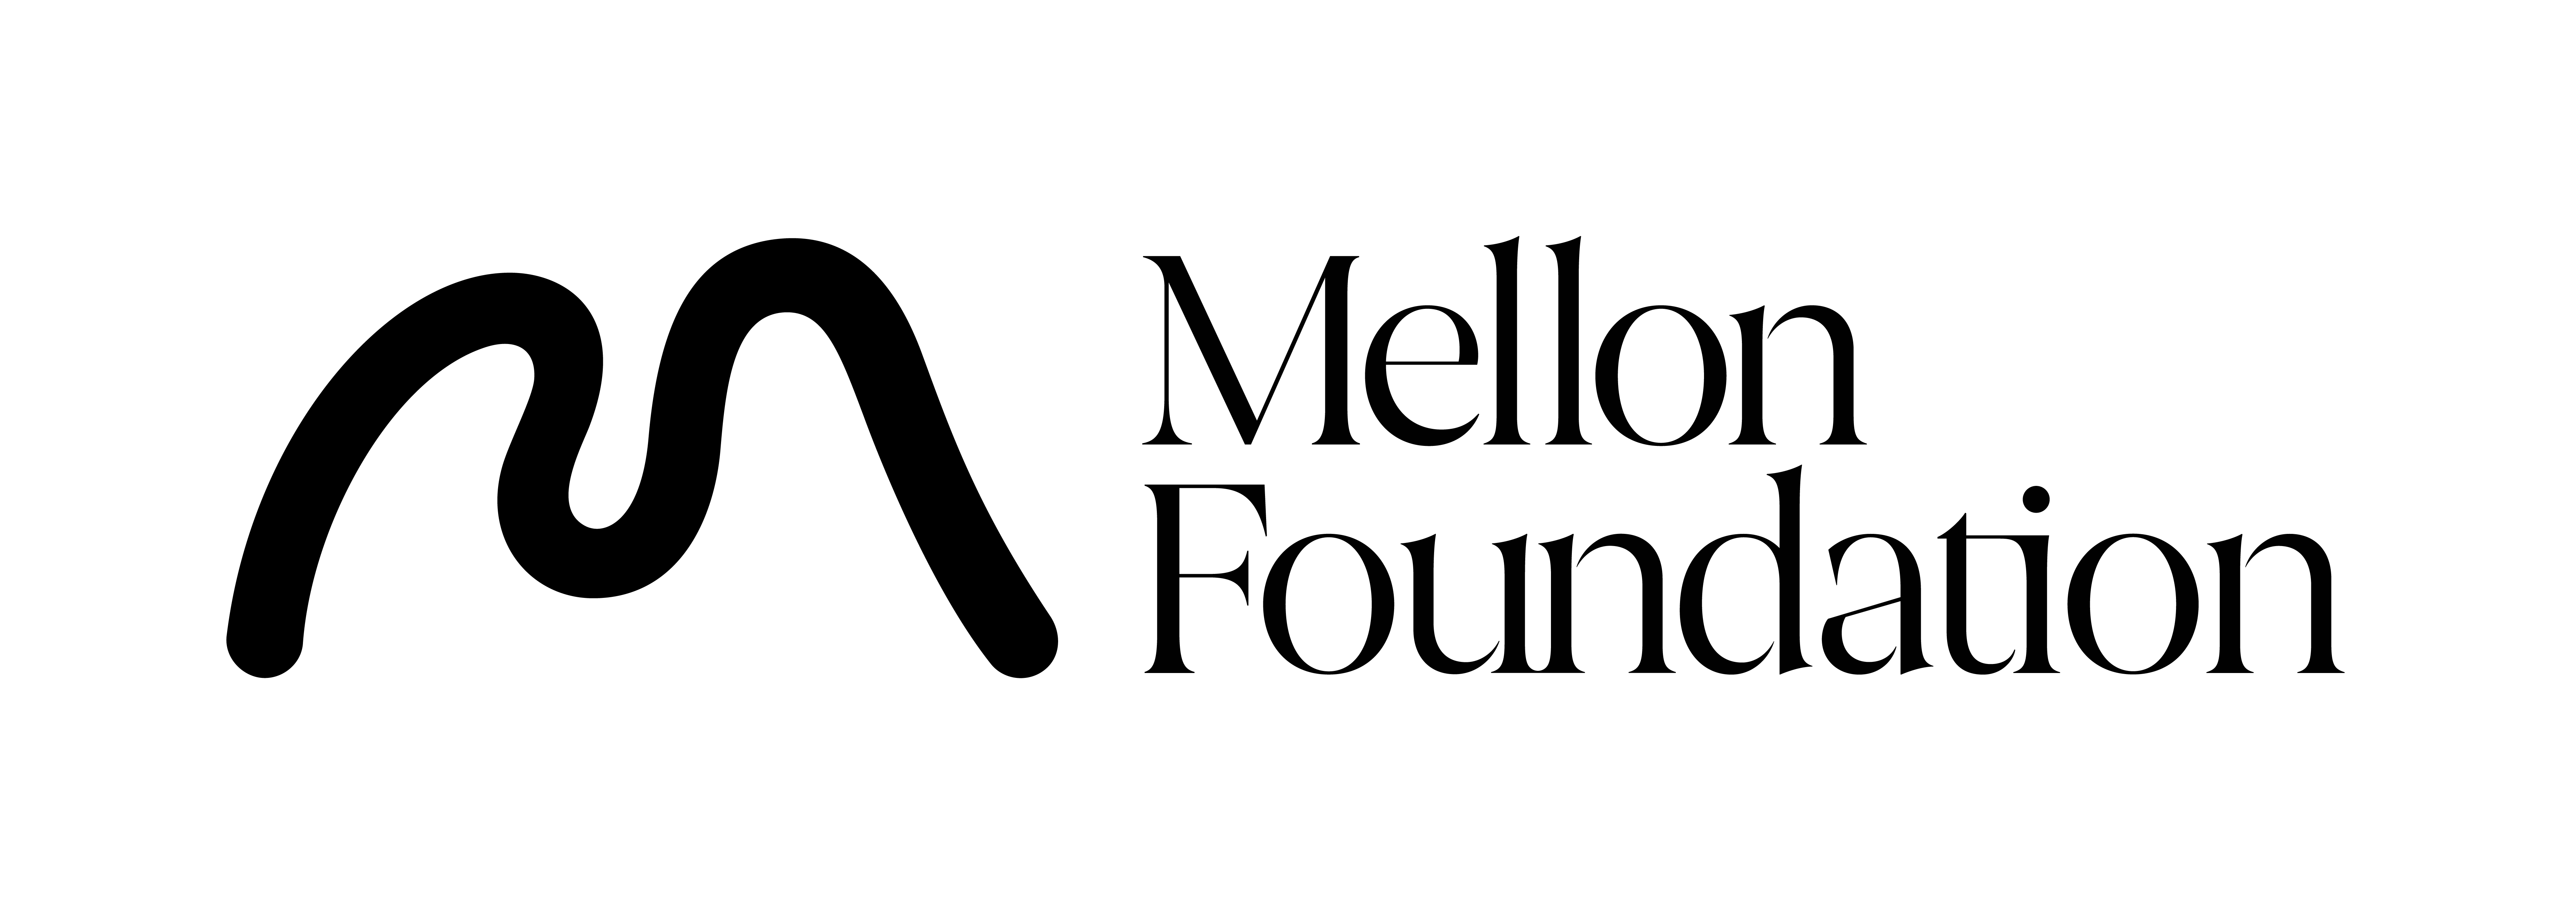 Mellon Foundation Logo in black and white